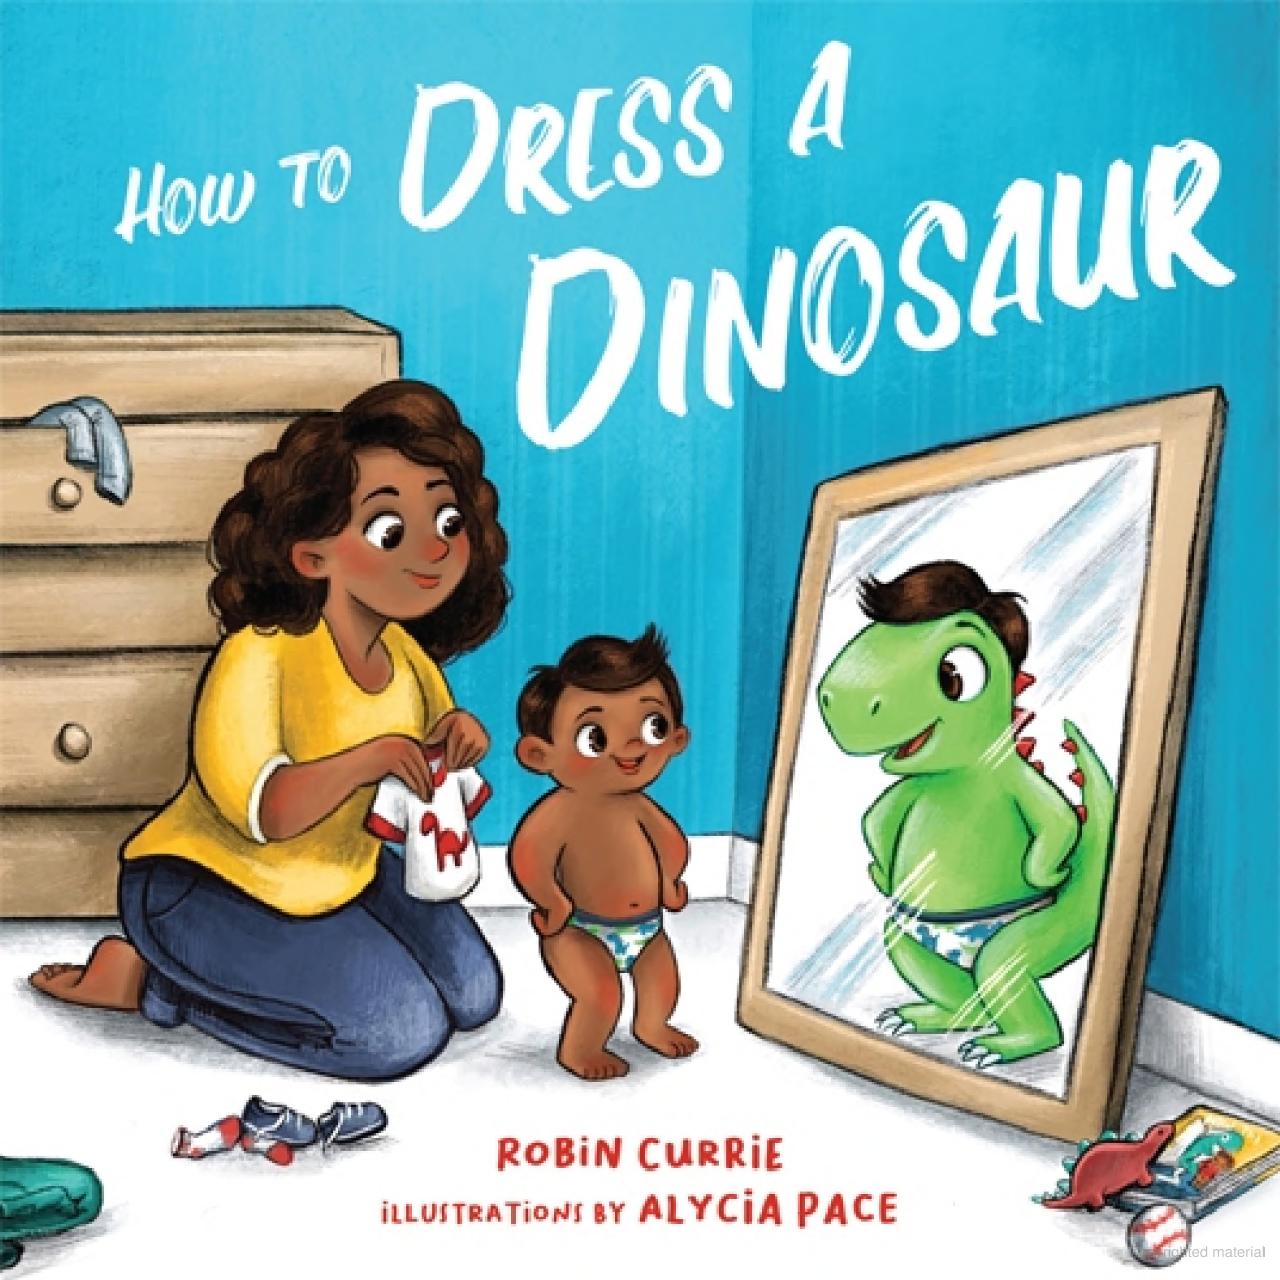 How to Dress a Dinosaur - HoneyBug 